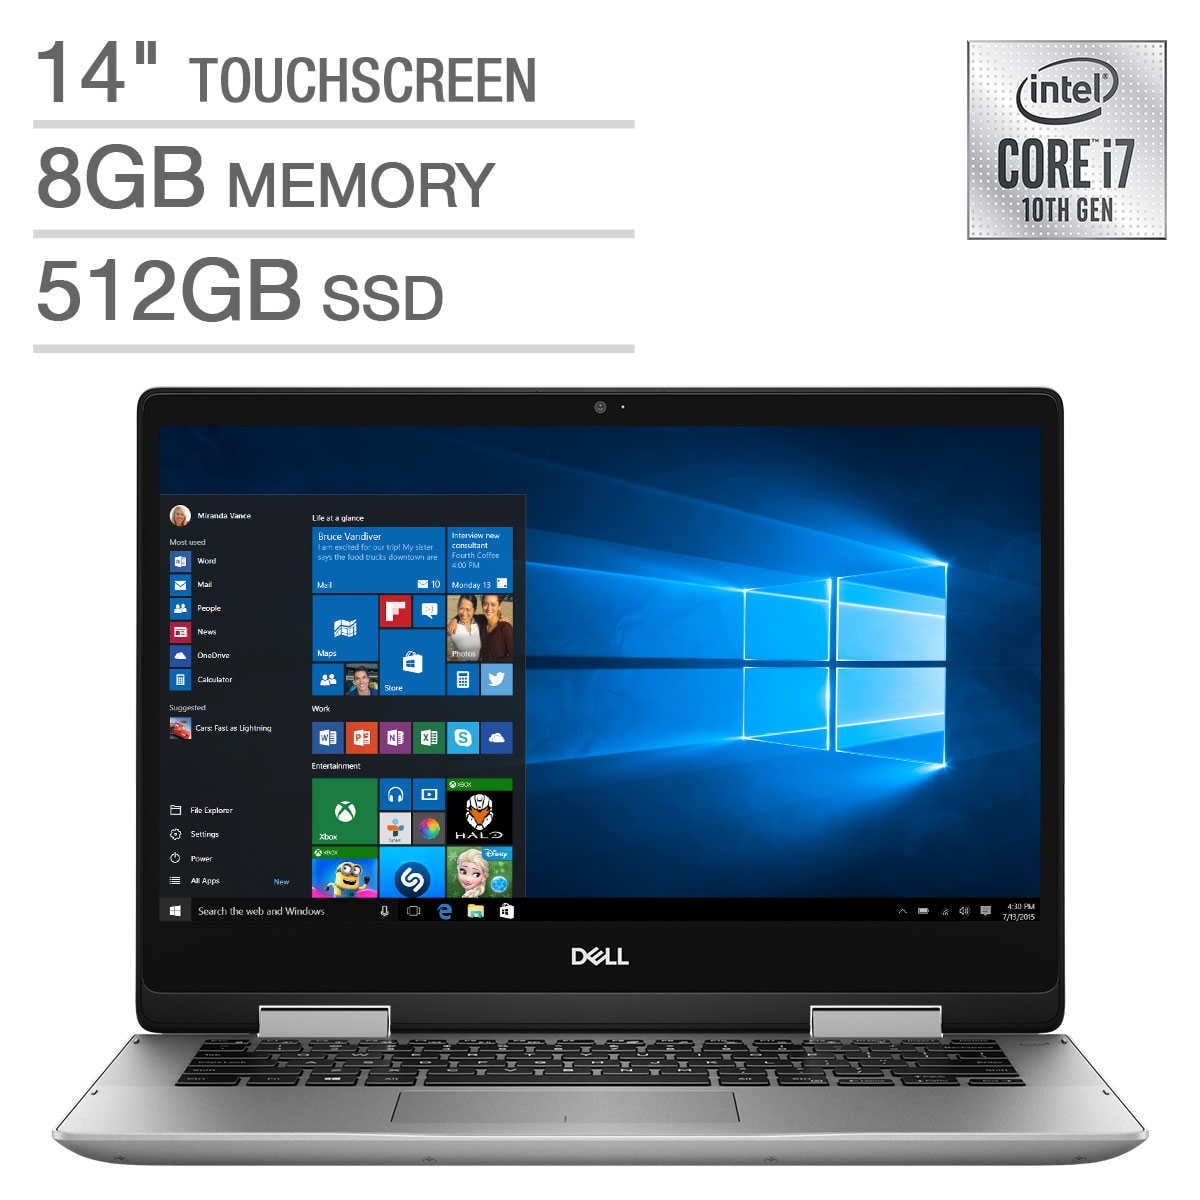 Dell Inspiron 14 5000 Series 2 In 1 14 Touchscreen Laptop 10th Gen Intel Core I7 512gb Ssd 8gb Memory Backlit Keyboard Bluetooth Webcam I5491 7265slv Pus Walmart Com Walmart Com